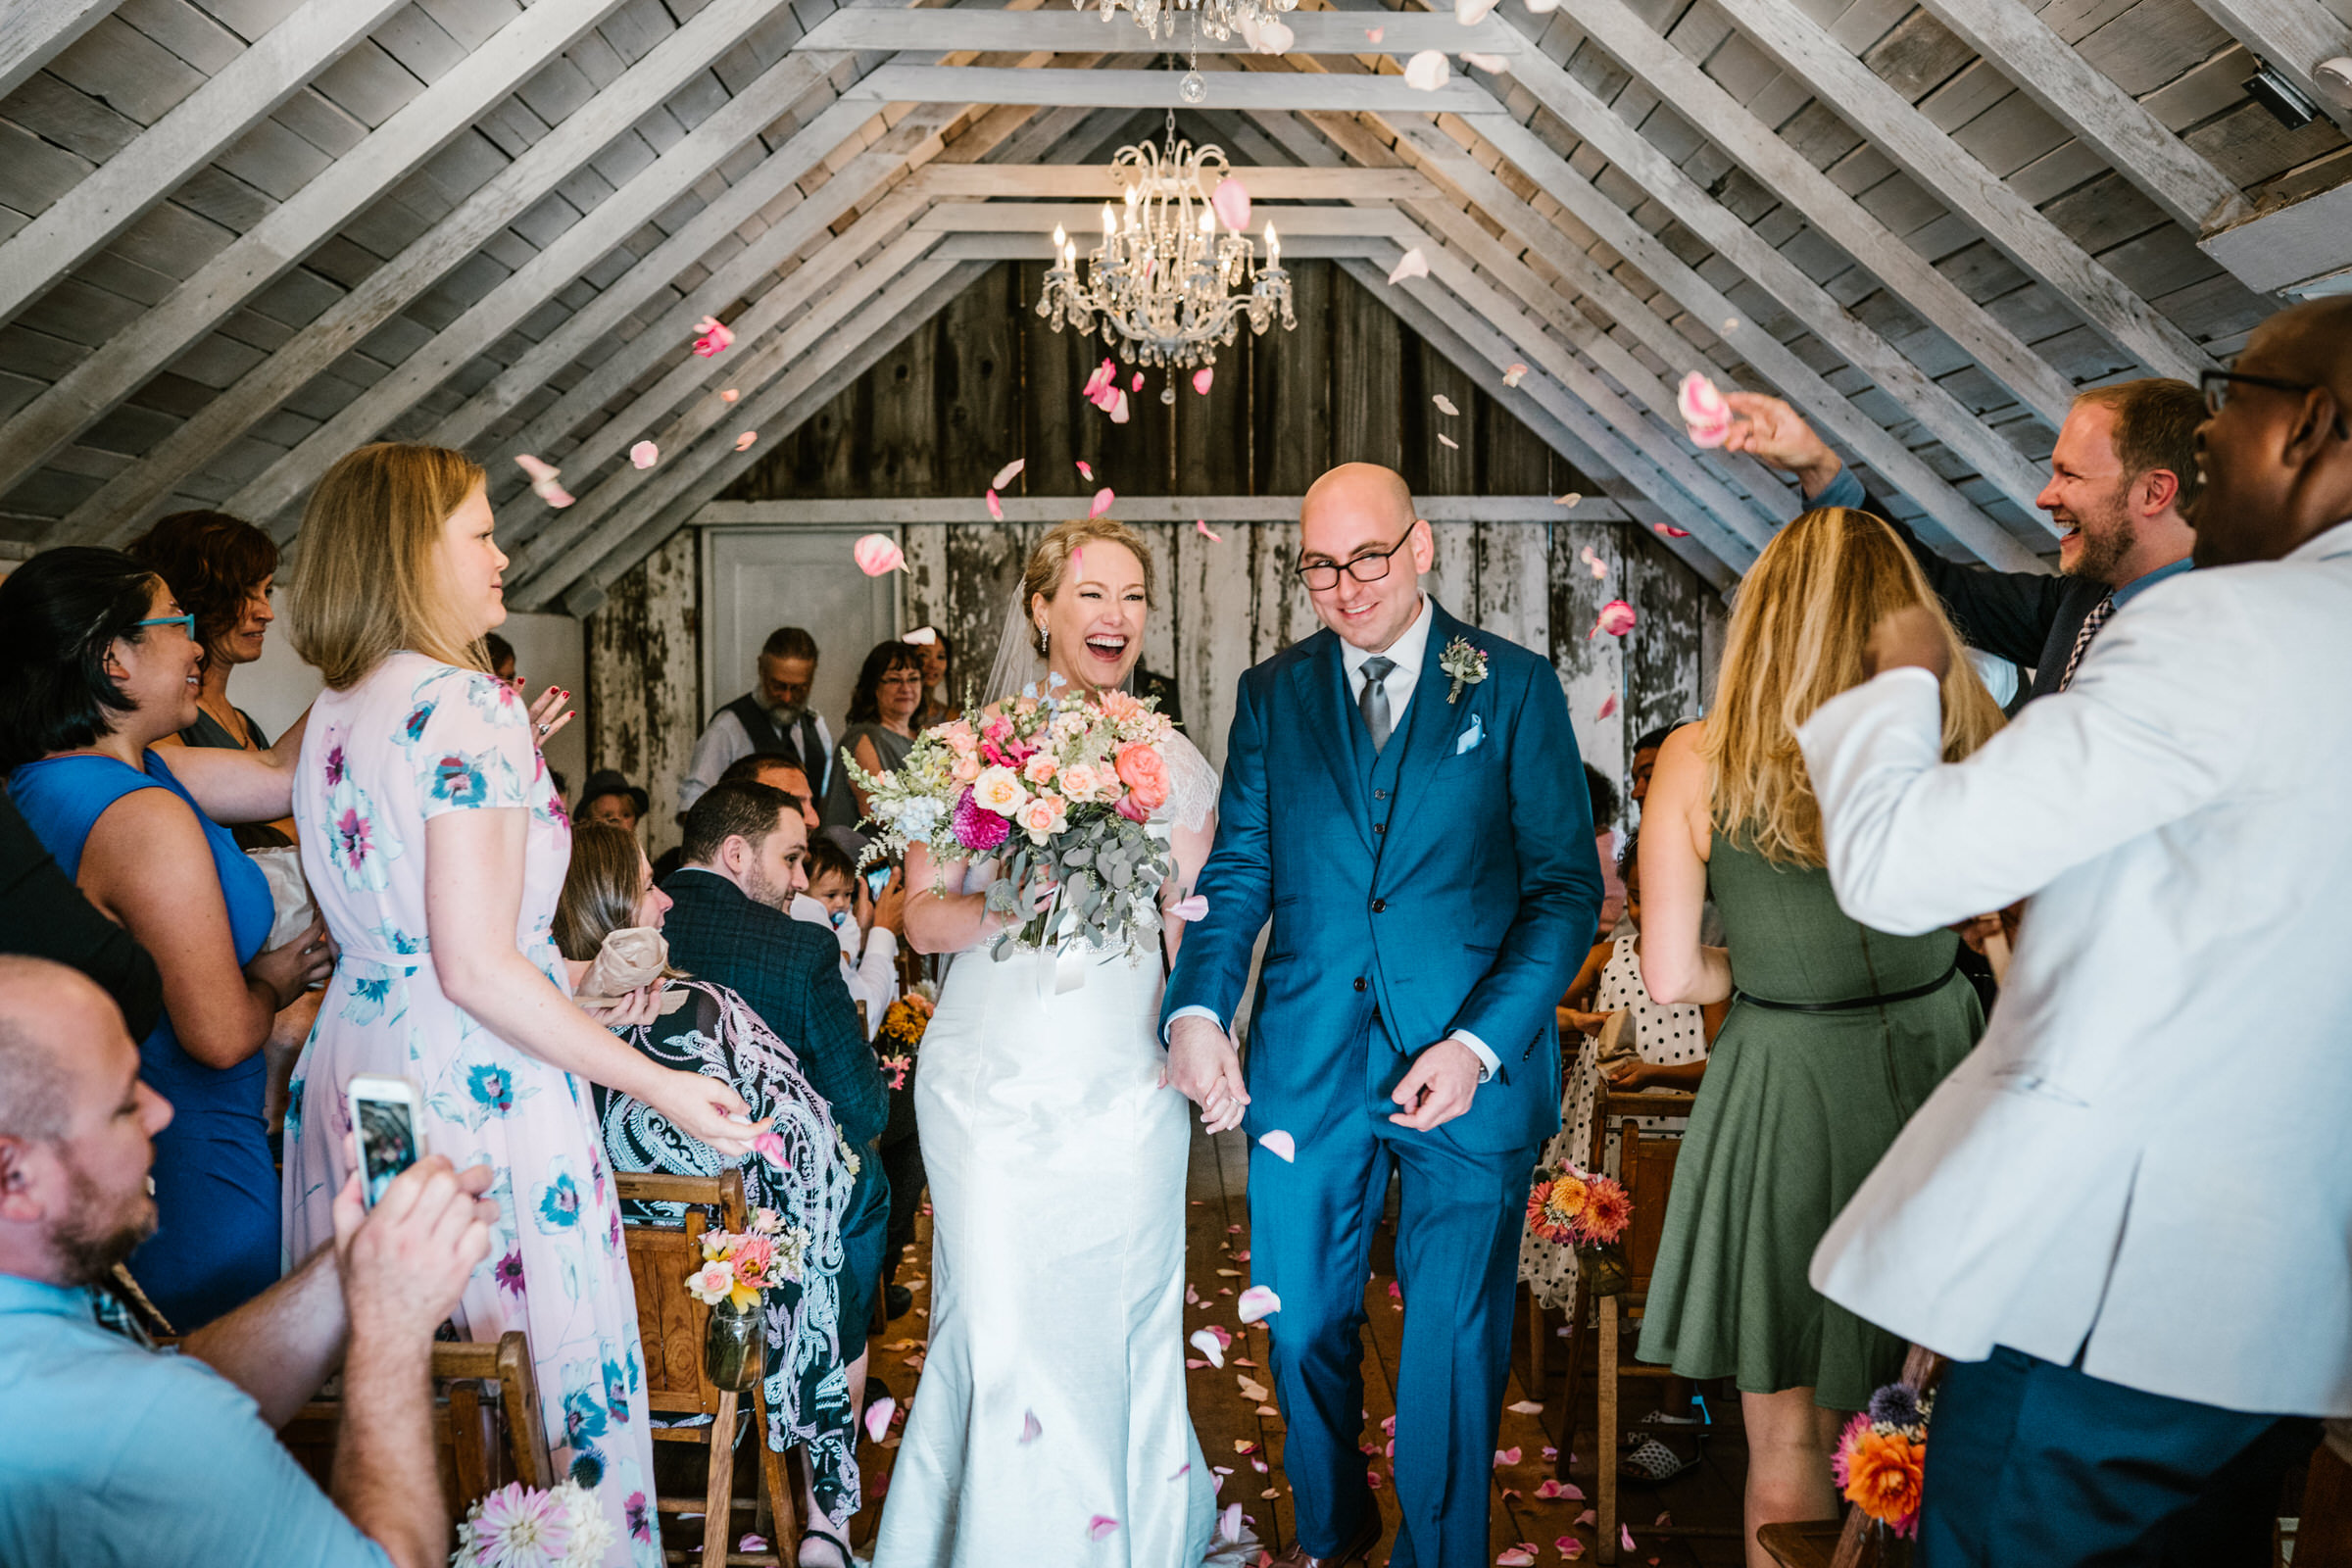 Wayfarer Whidbey Island Wedding: Sara and Joe walk down the aisle as guests throw rose petals